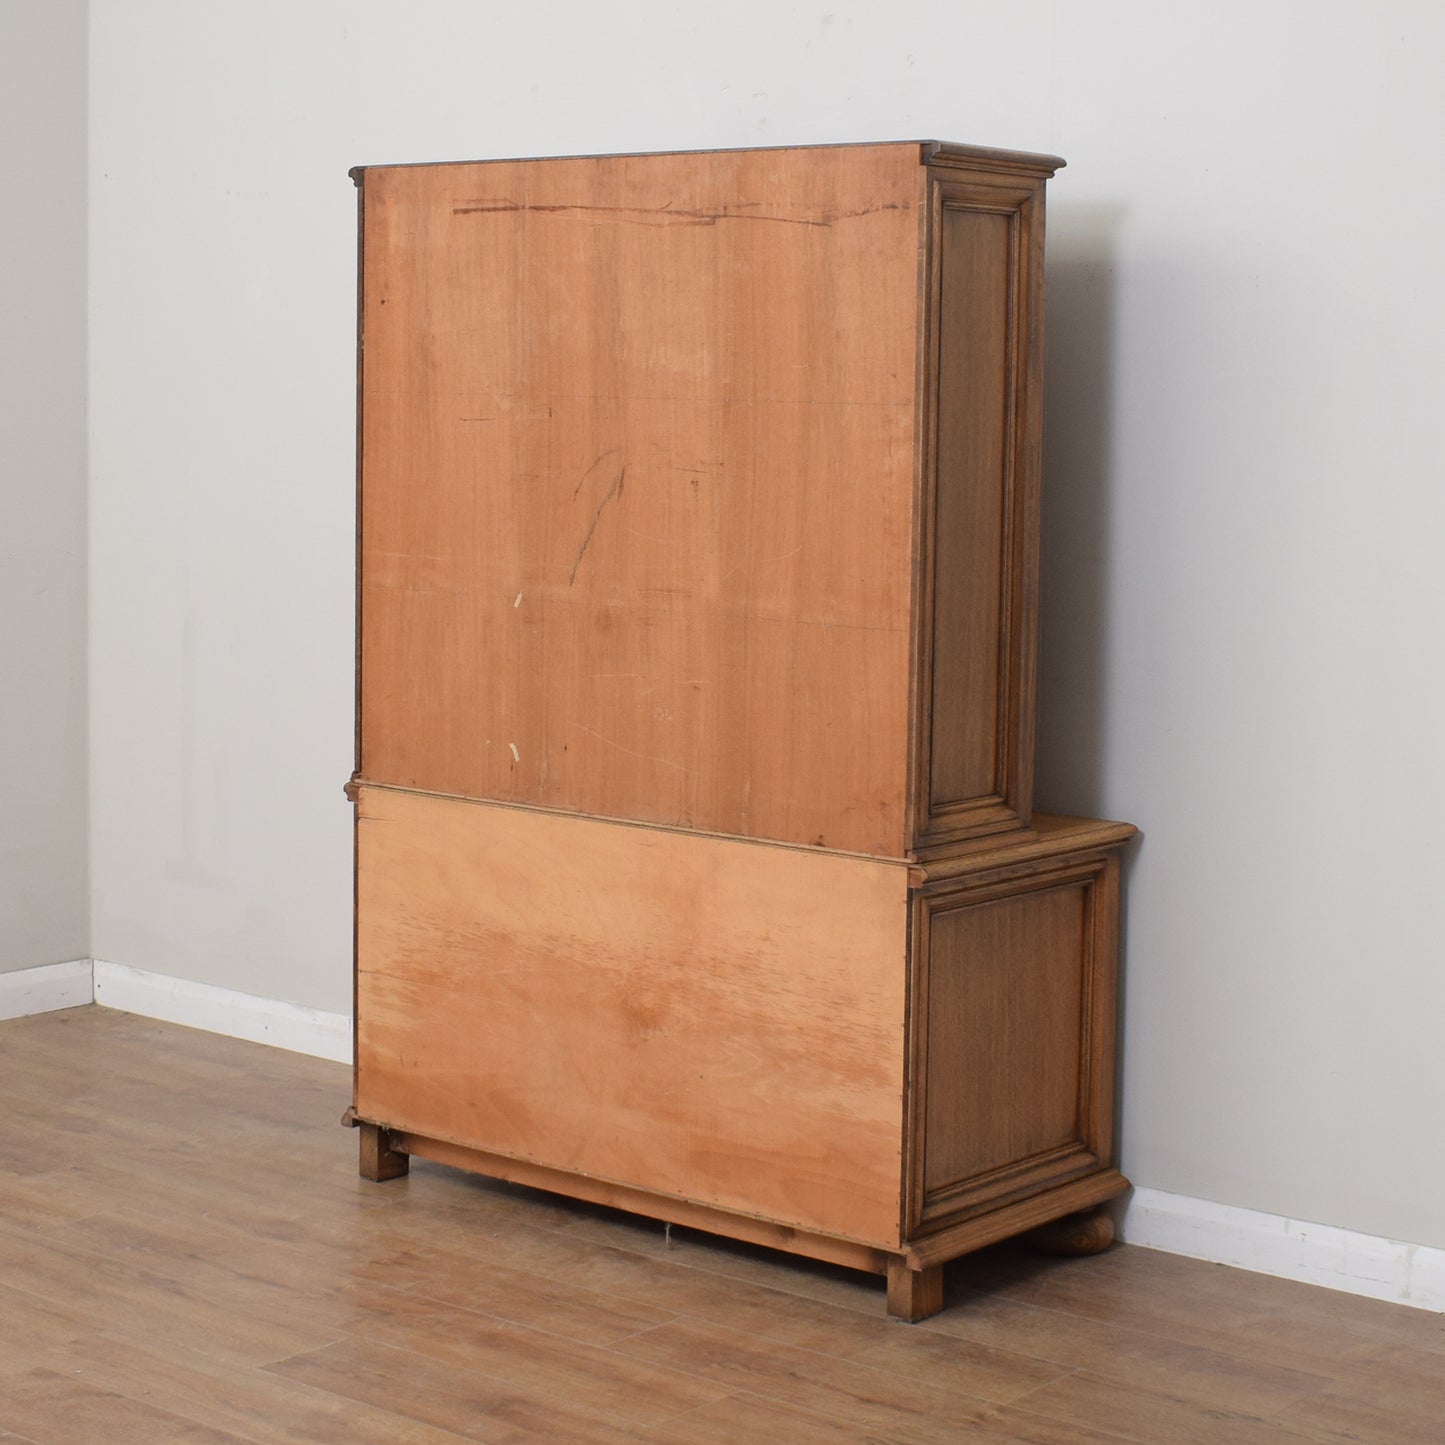 Oak Bookcase With Storage 
Cabinet